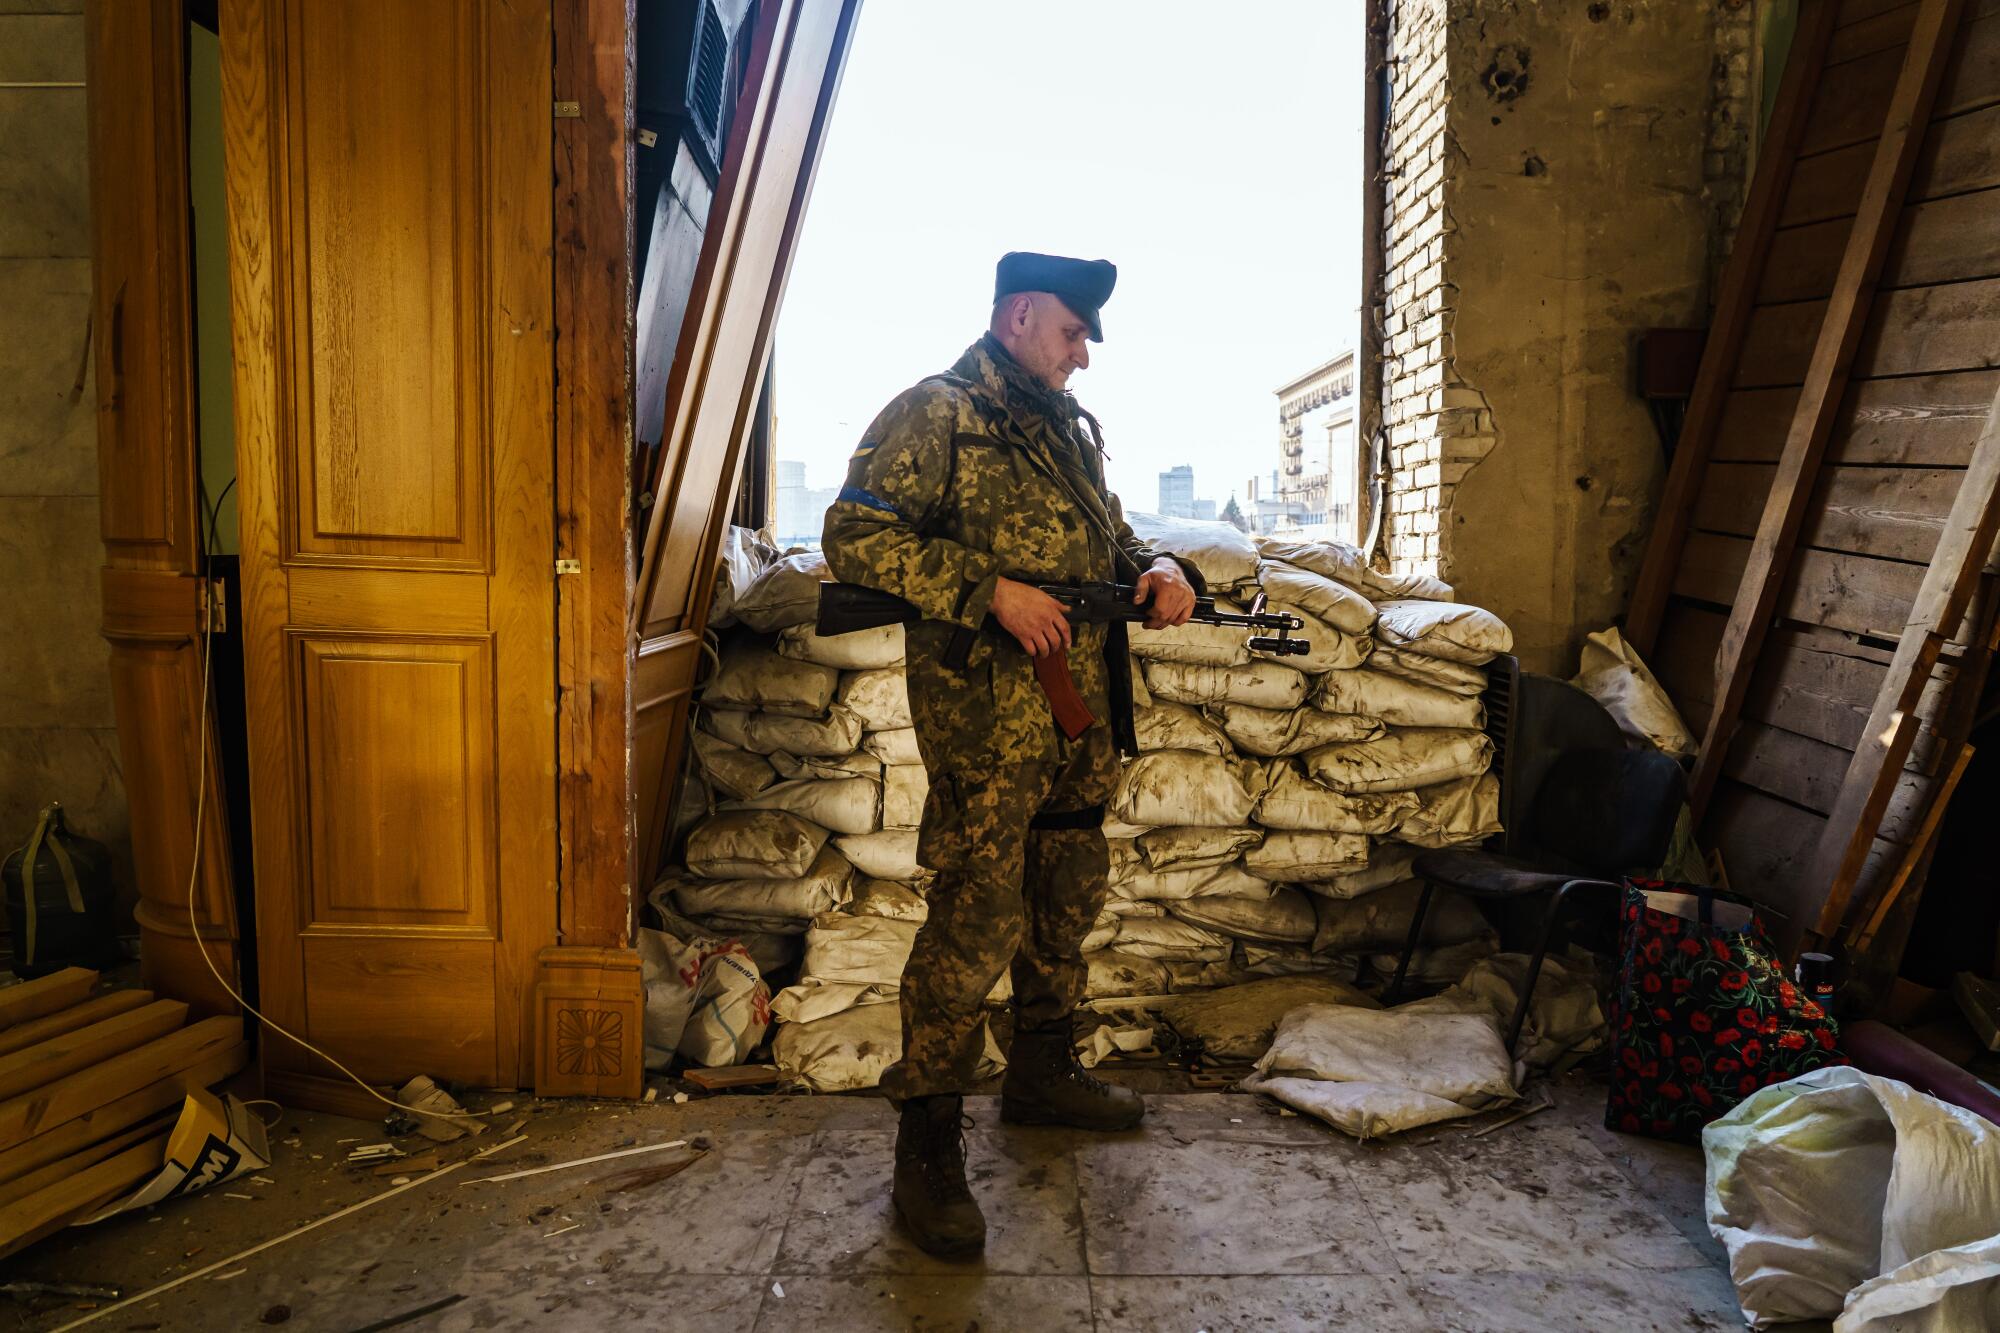 Oleg Supereka, who survived attacks on the Kharkiv Regional Administration building, is back at his post in Kharkiv, Ukraine